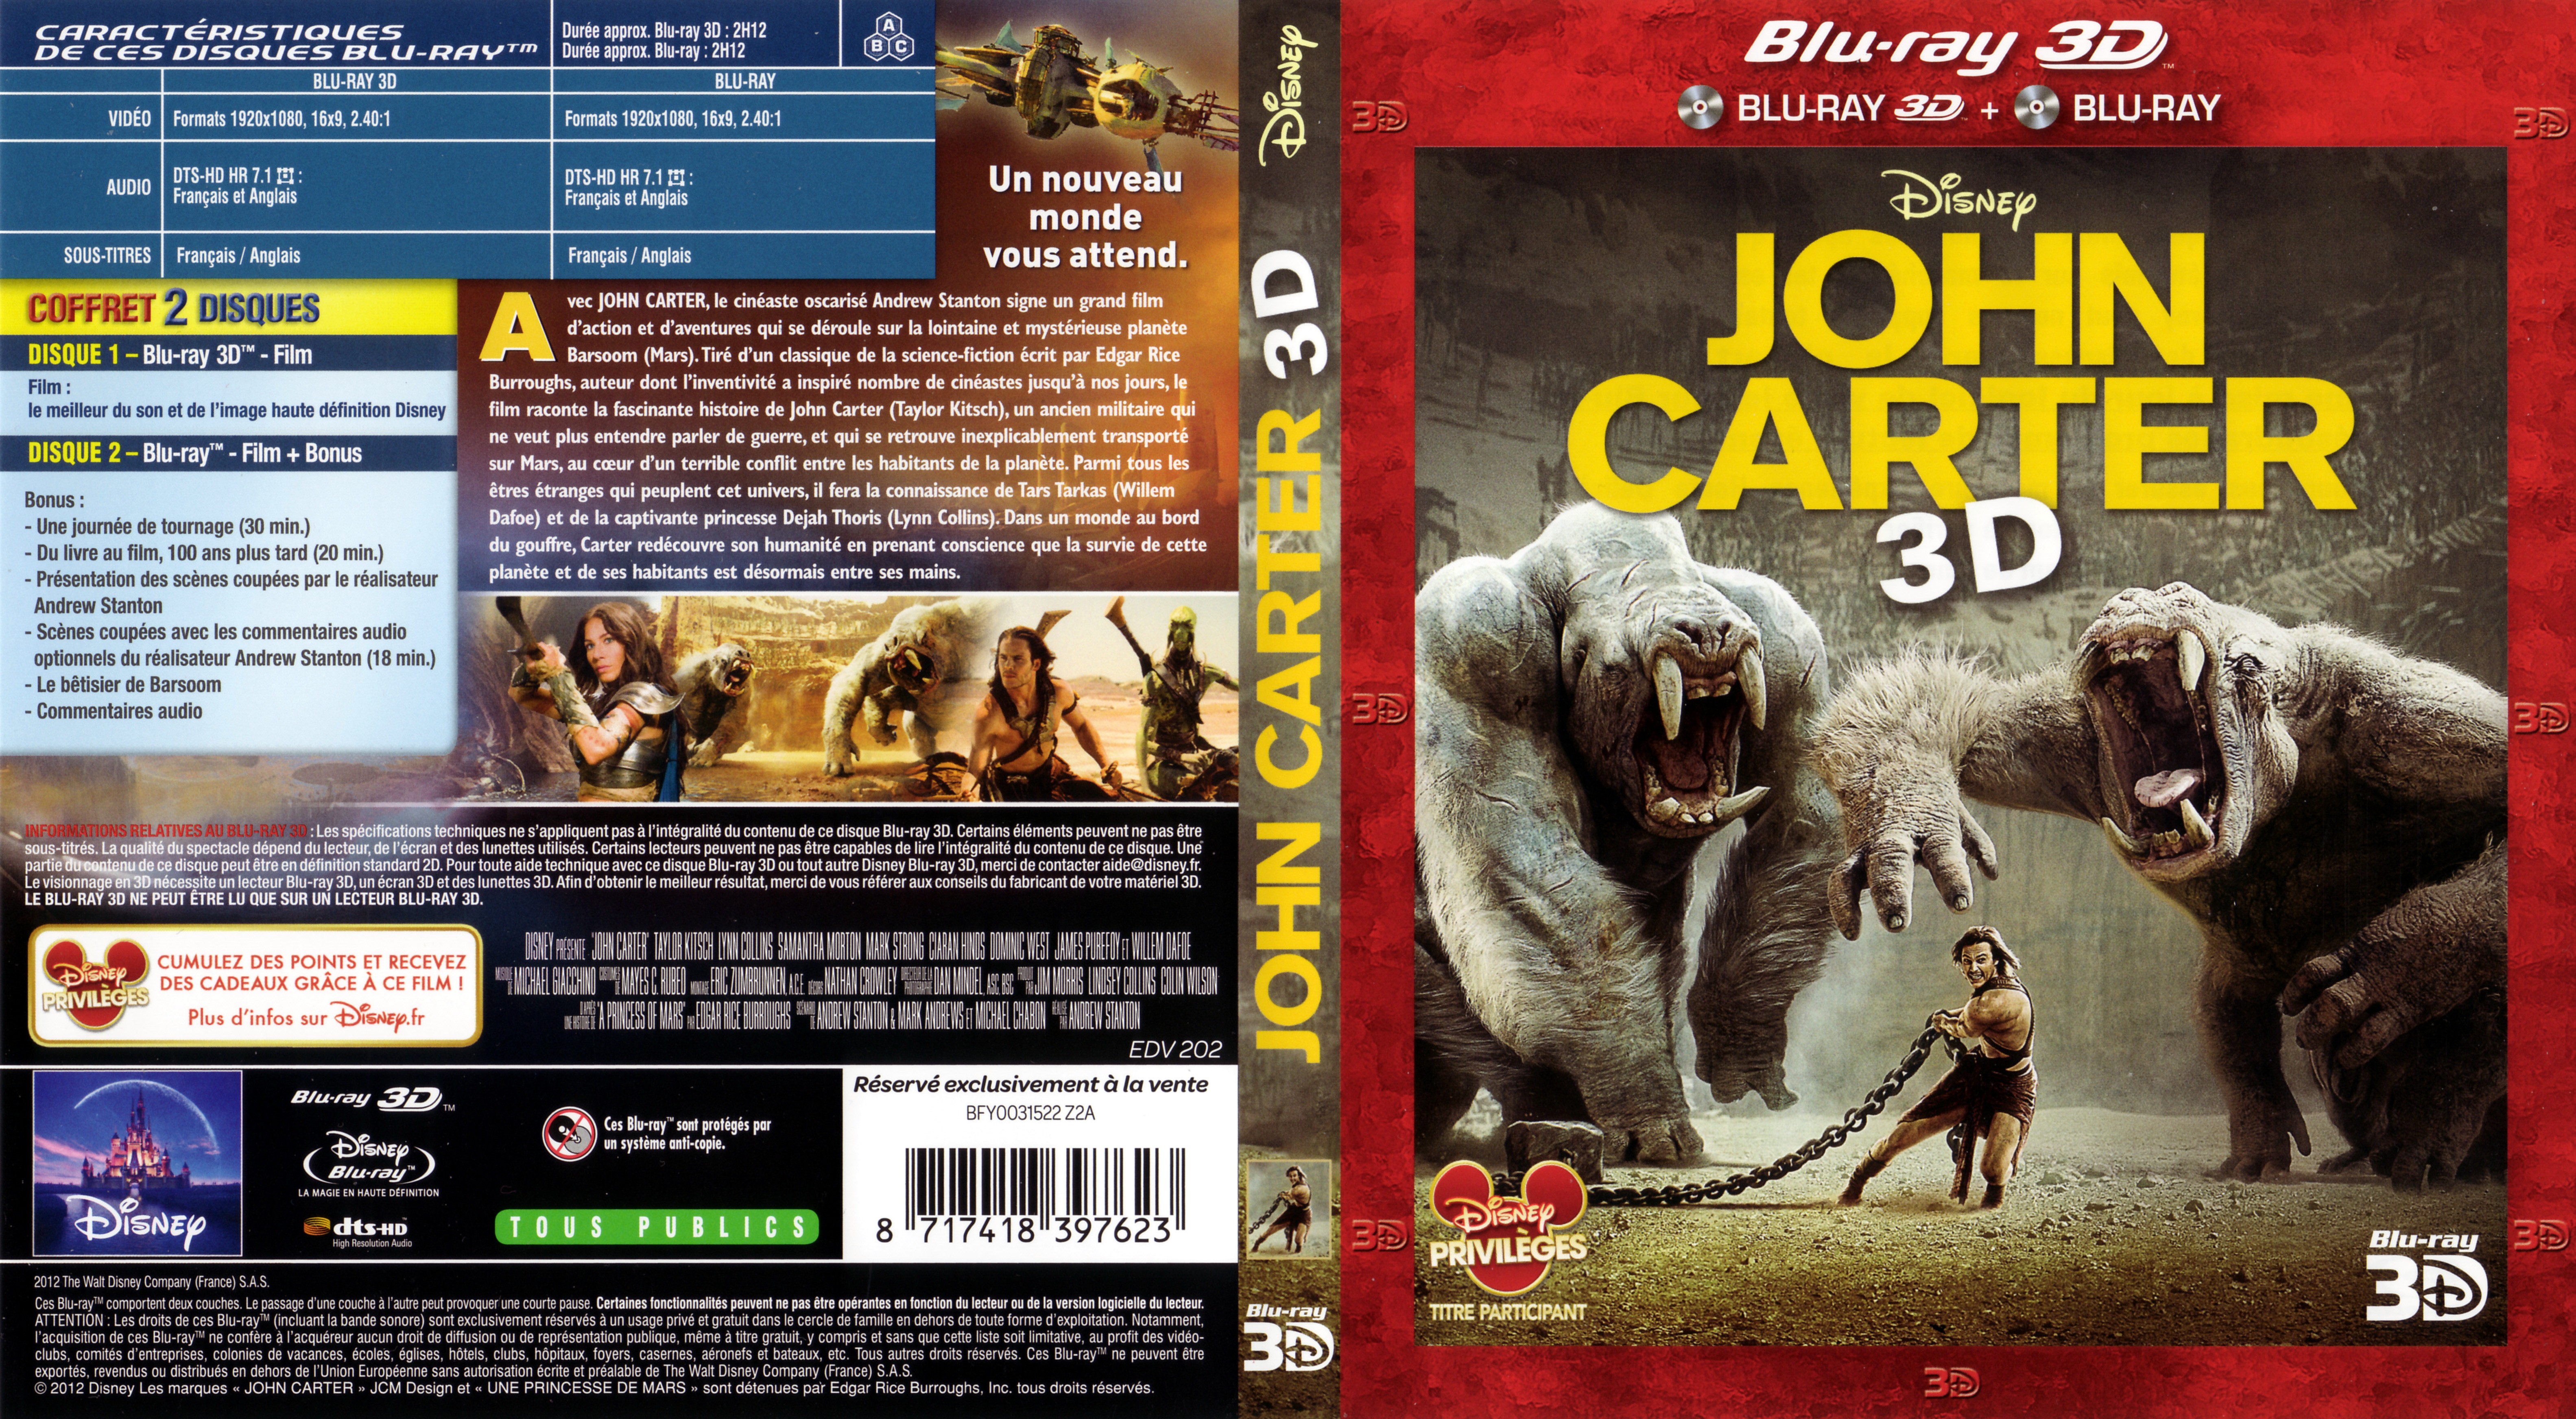 Jaquette DVD John Carter 3D (BLU-RAY) v2